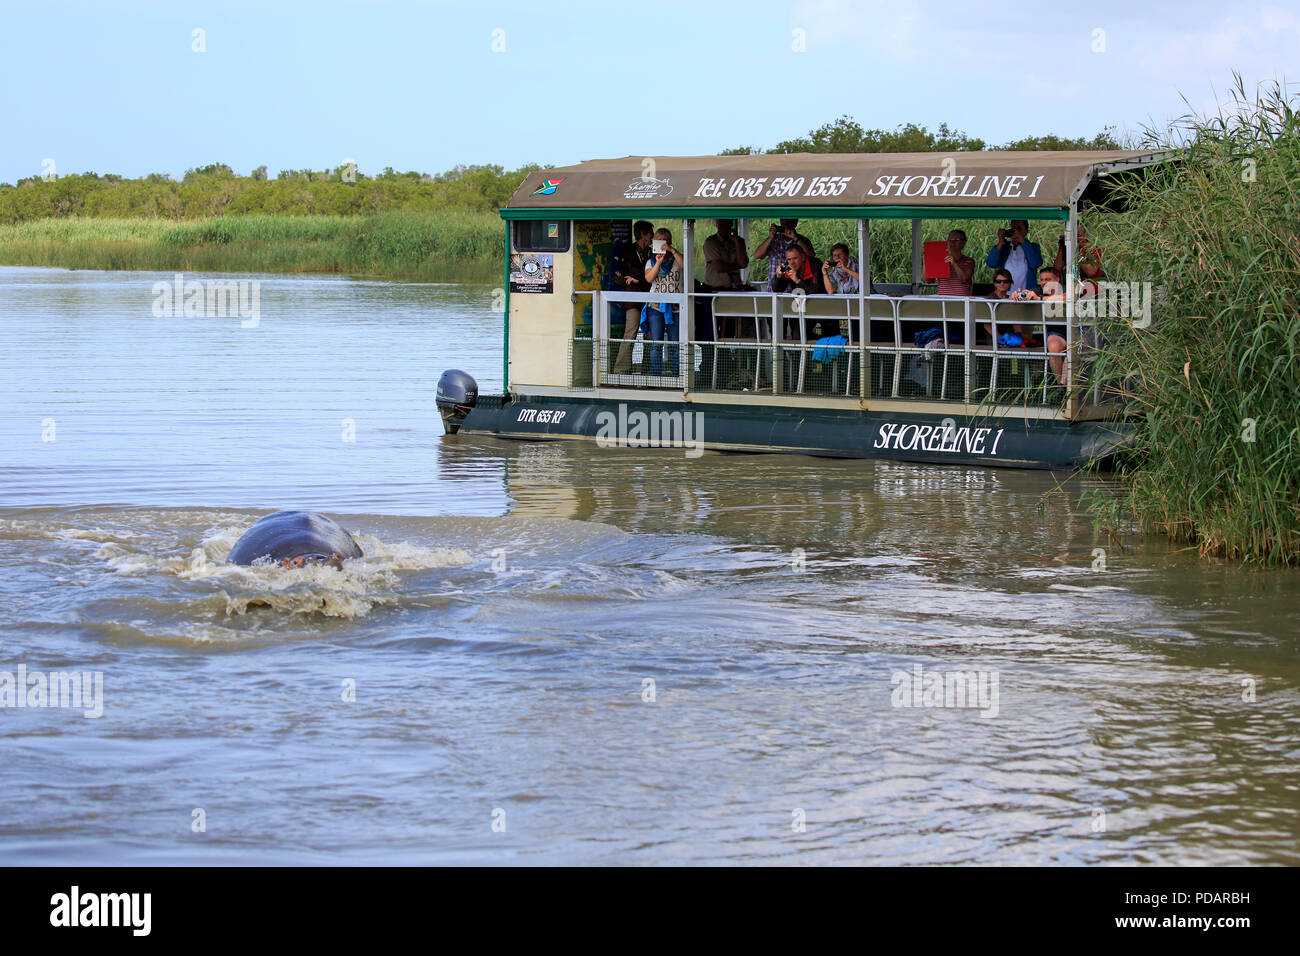 Escursione in barca, i turisti su safari in barca, St Lucia St Lucia Estuary, Isimangaliso Wetland Park, Kwazulu Natal, Sud Africa e Africa Foto Stock